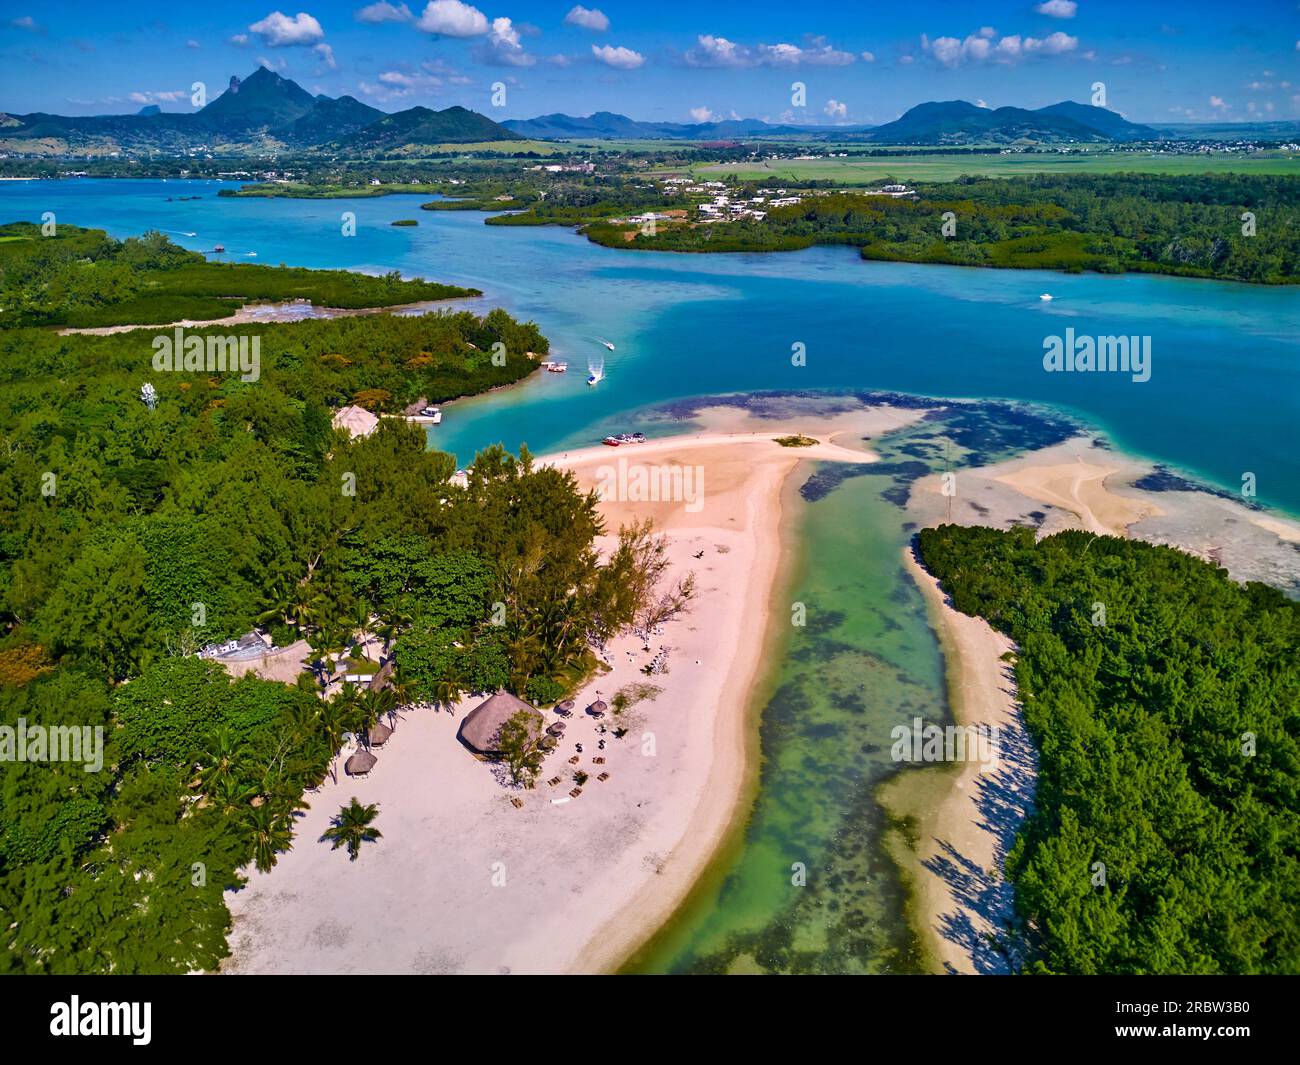 Mauritius, Flacq district, Ile aux Cerfs island, deer island, aerial view Stock Photo